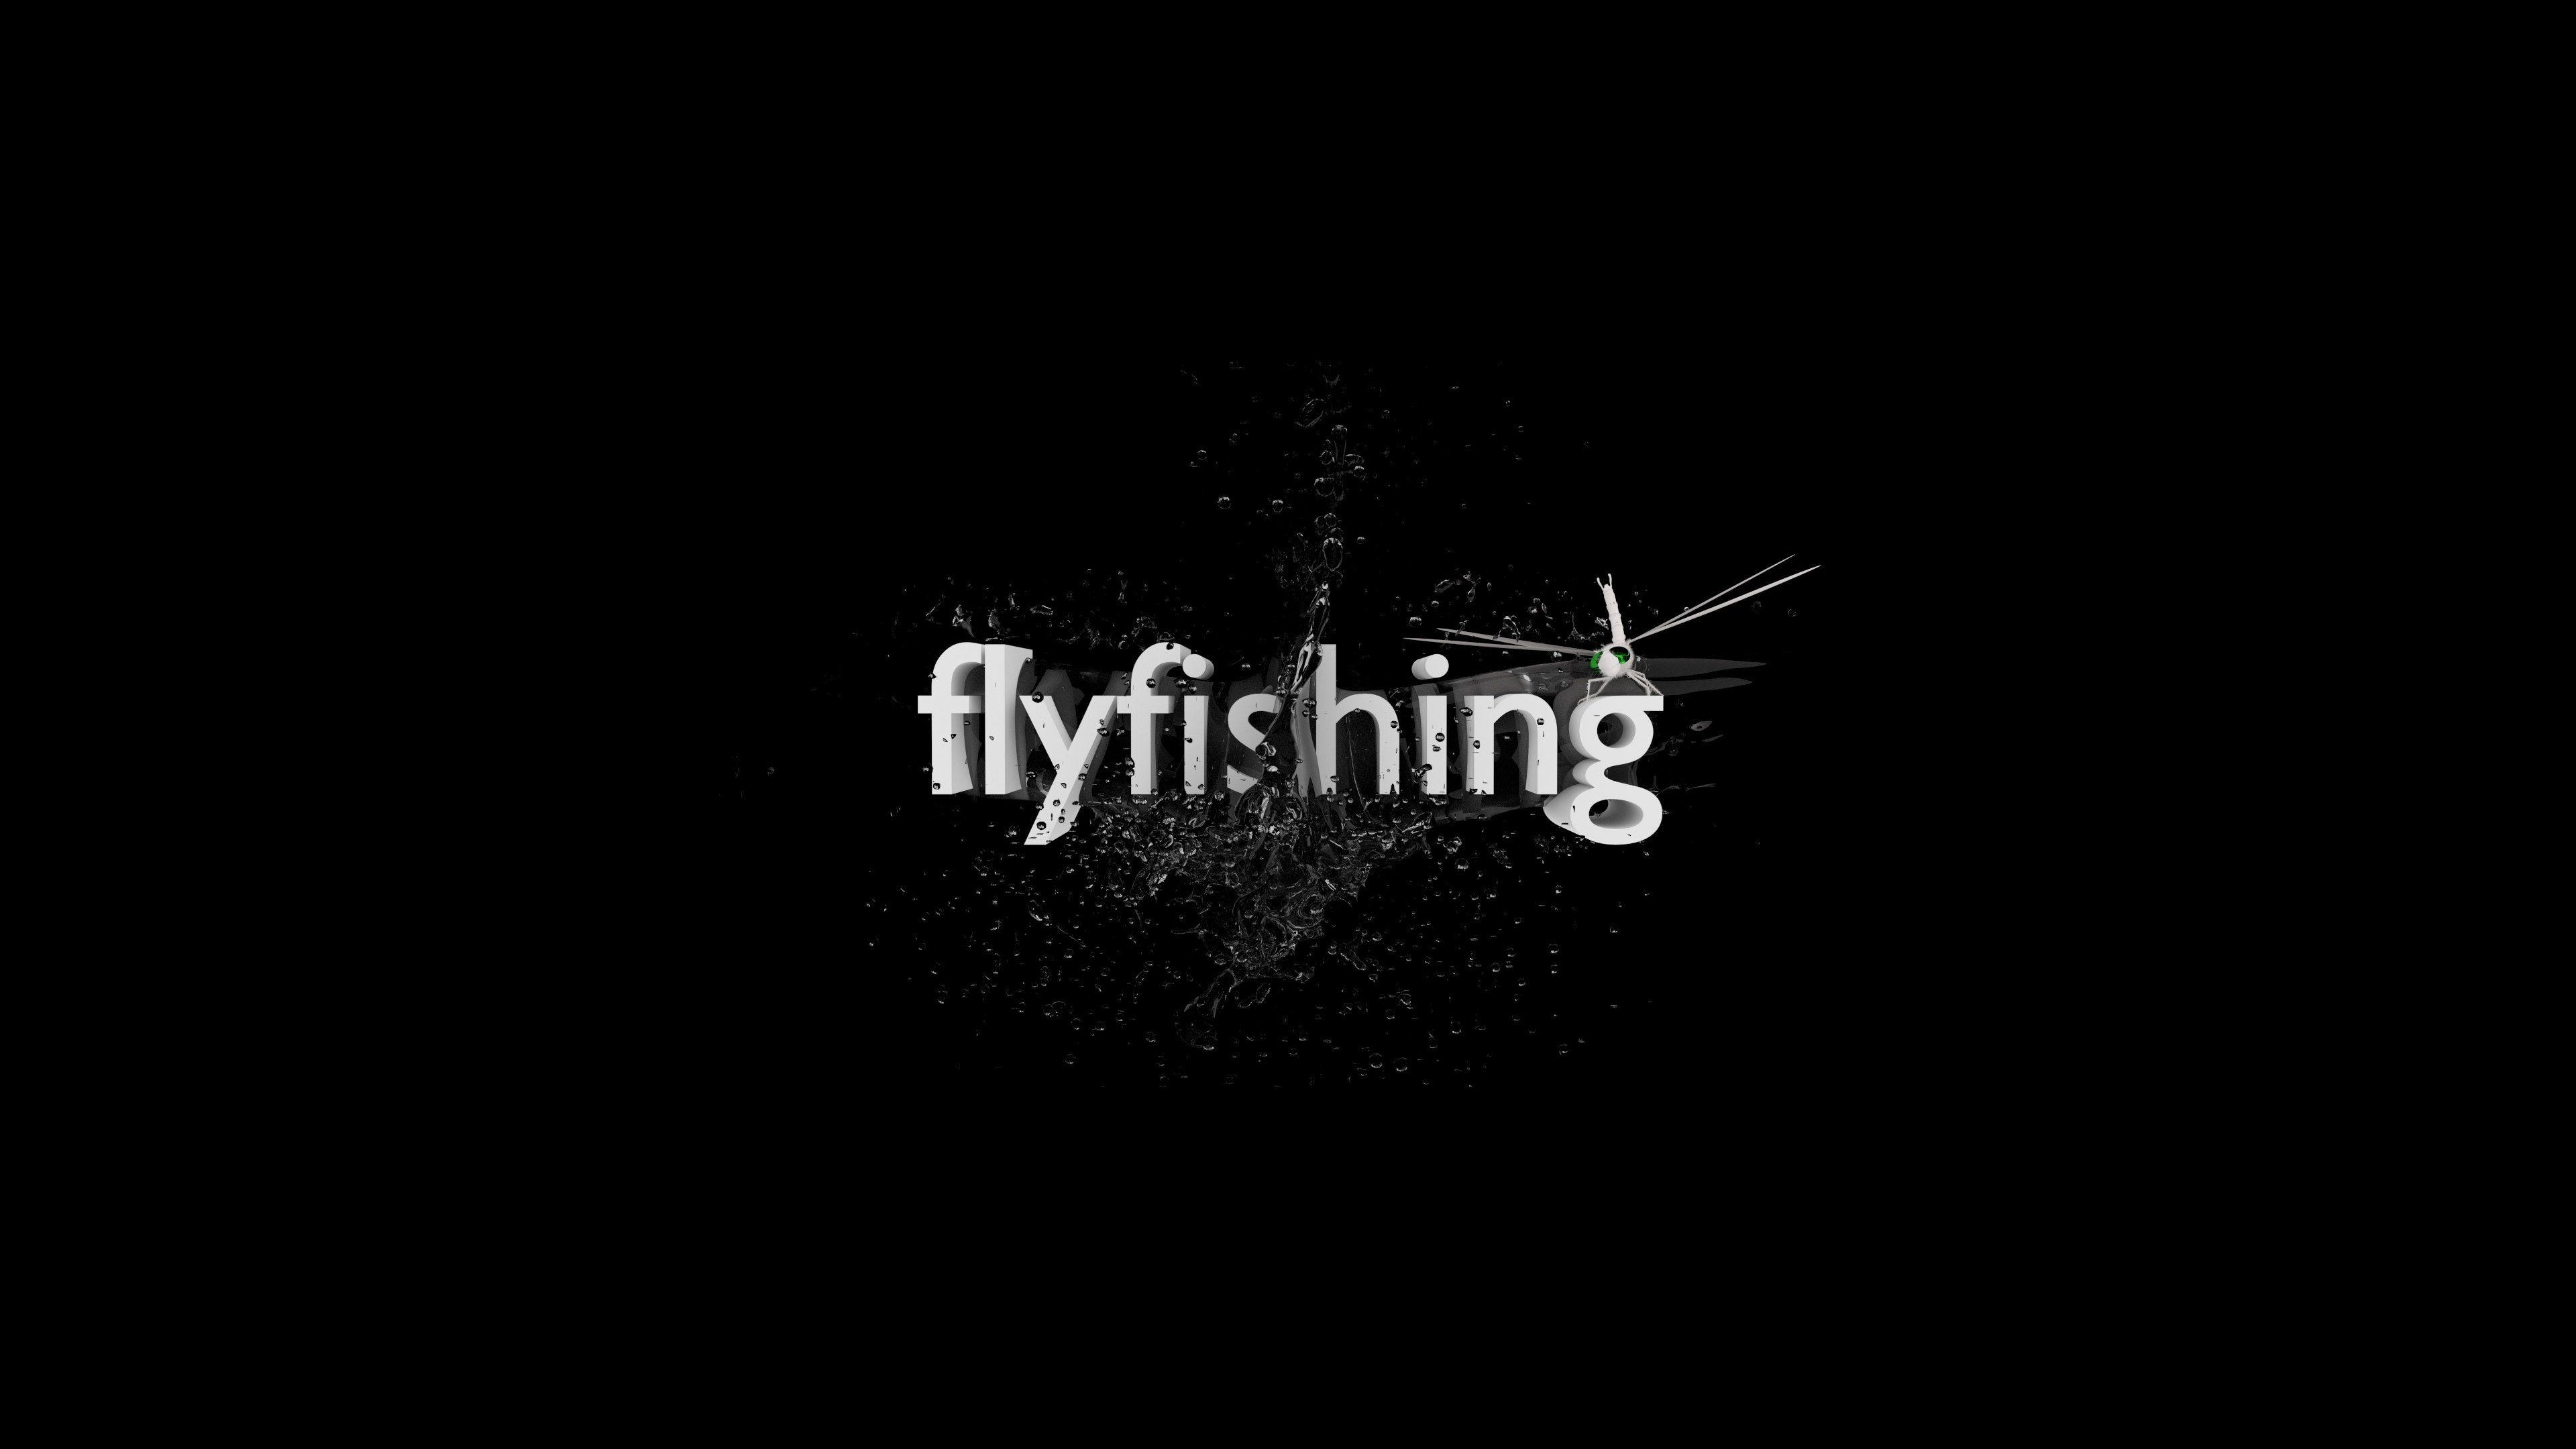 Photoshop Fly Fishing 4k Ultra HD Wallpaper